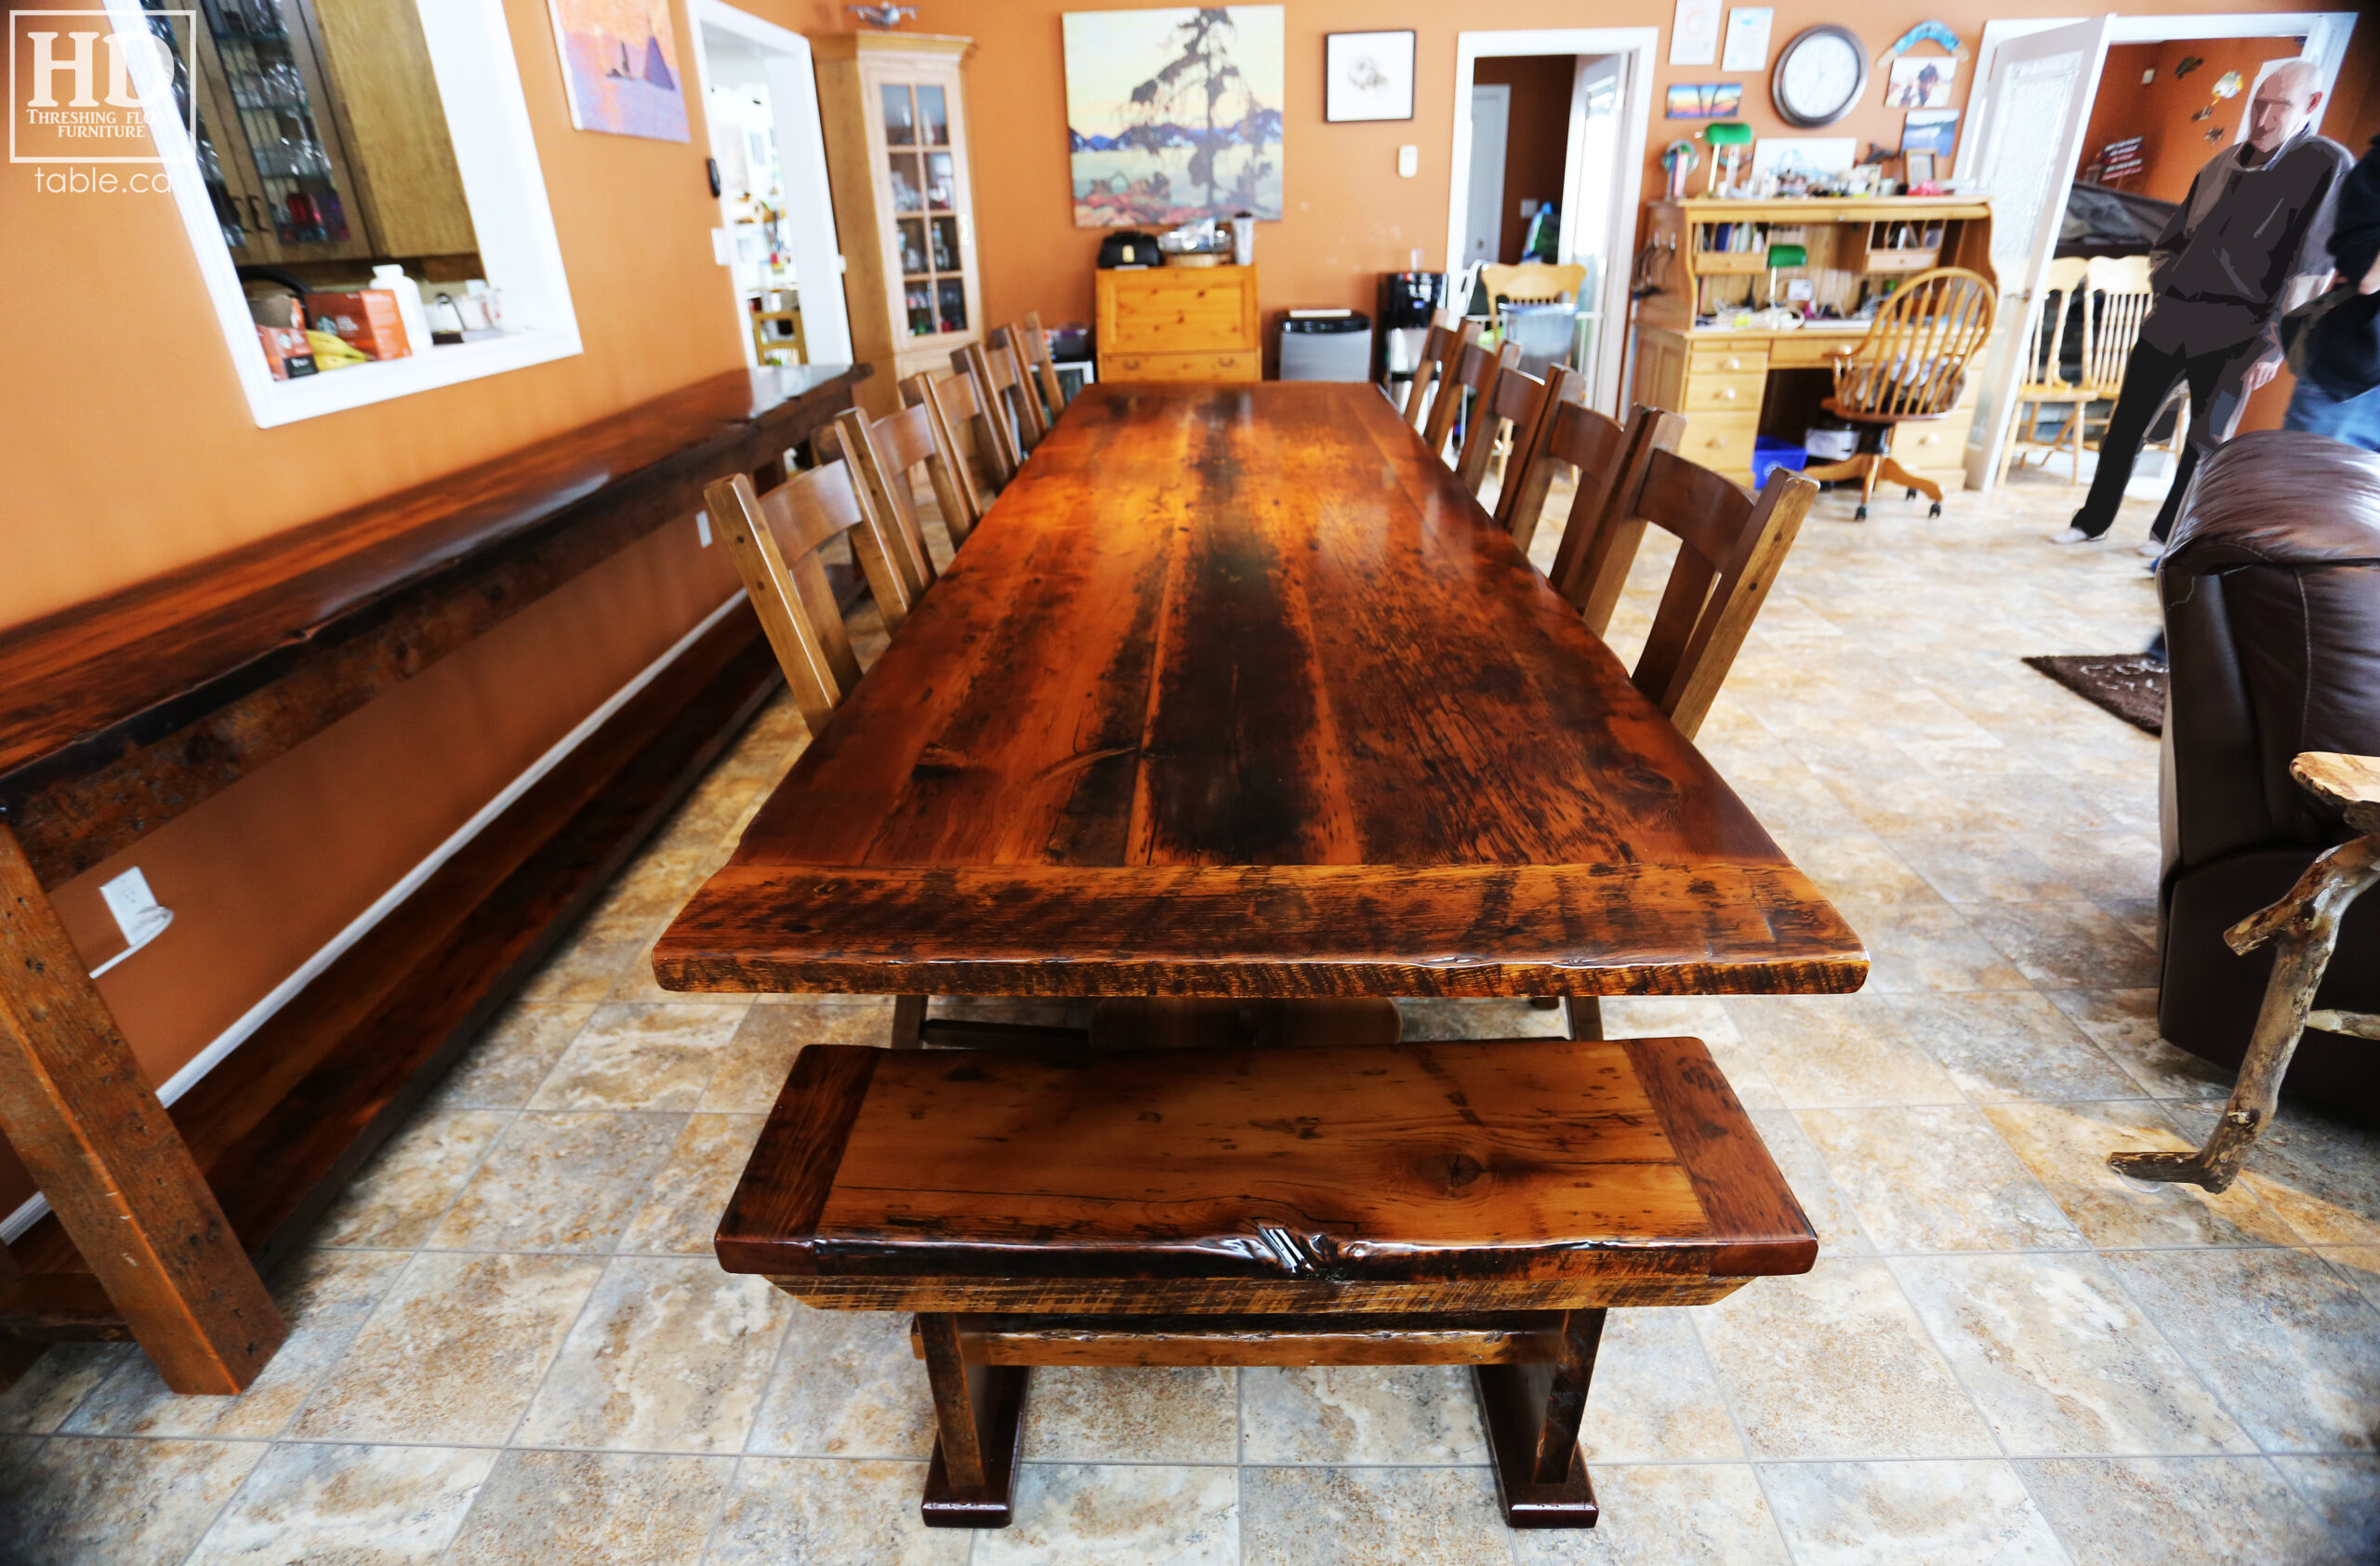 Reclaimed Wood Threshing Floor Table made from Ontario Barnwood by HD Threshing Floor Furniture / www.table.ca